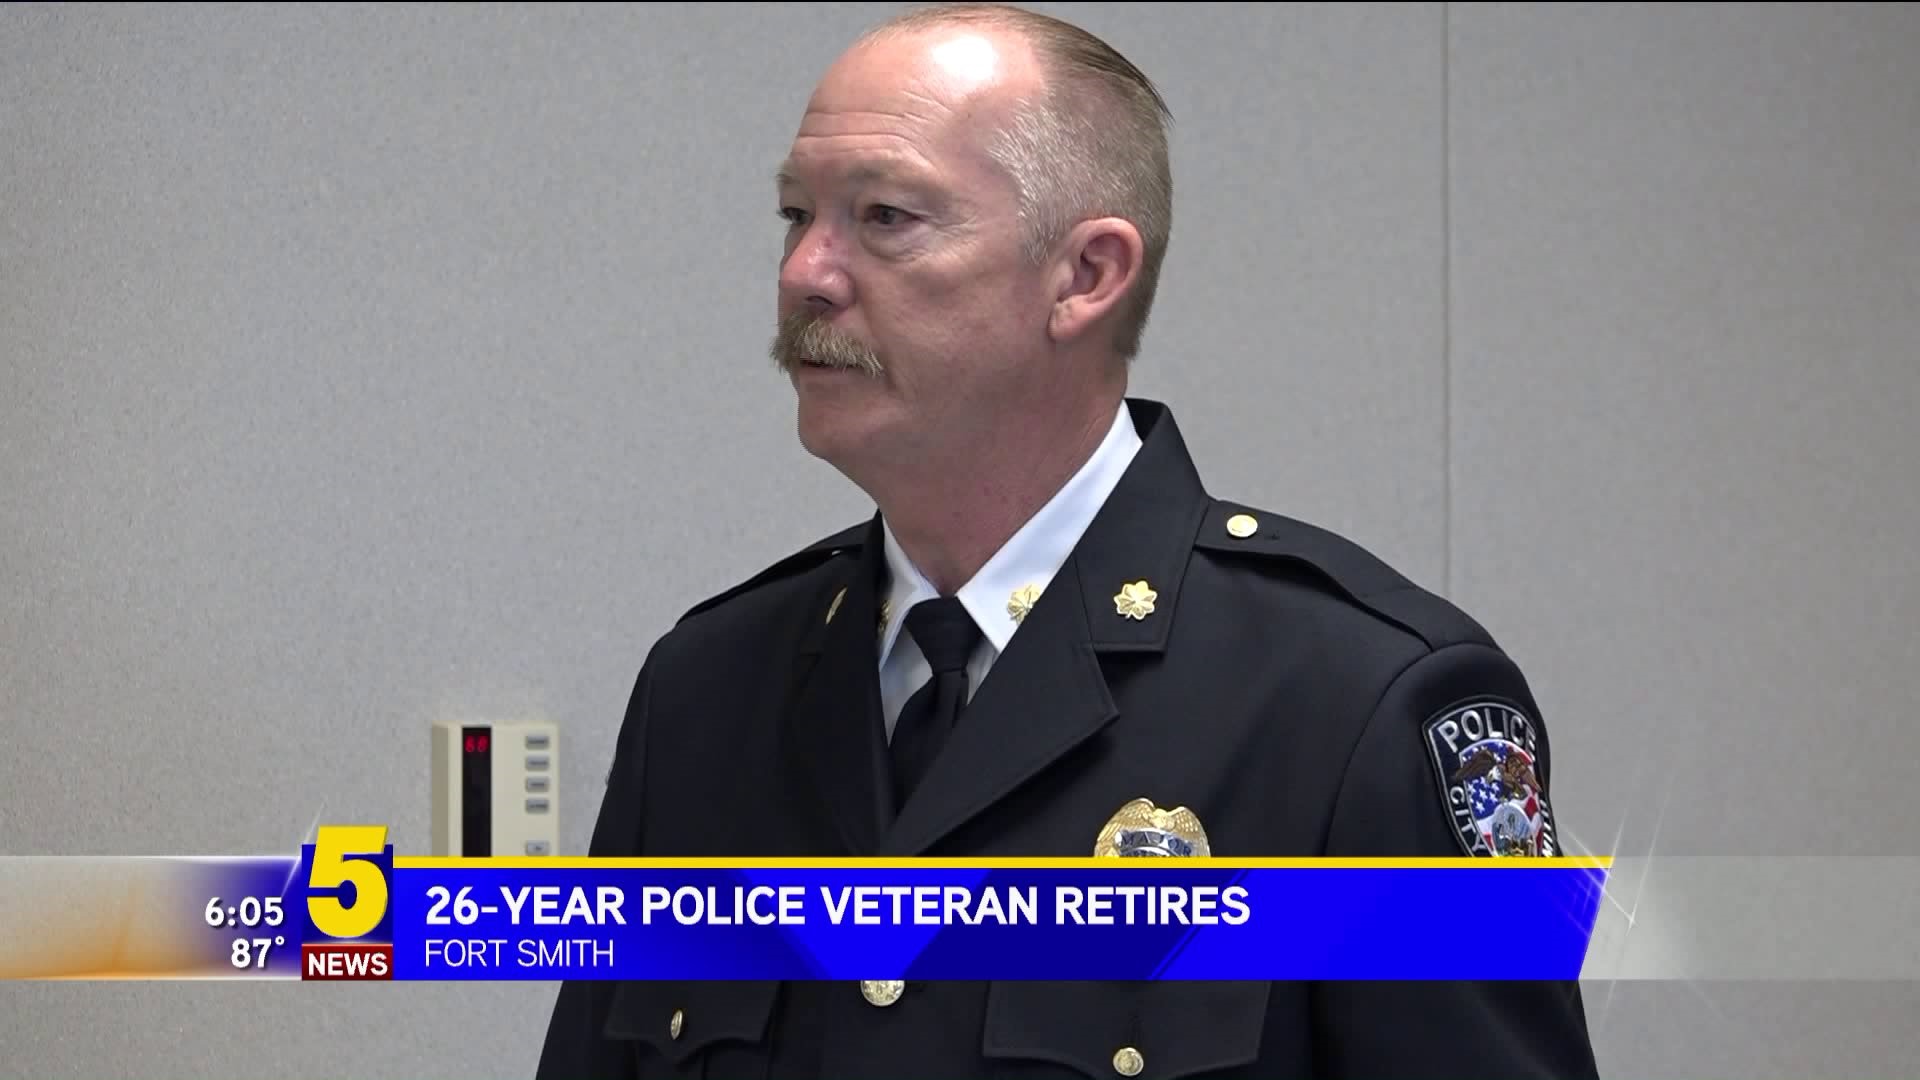 26-Year Police Veteran Retires